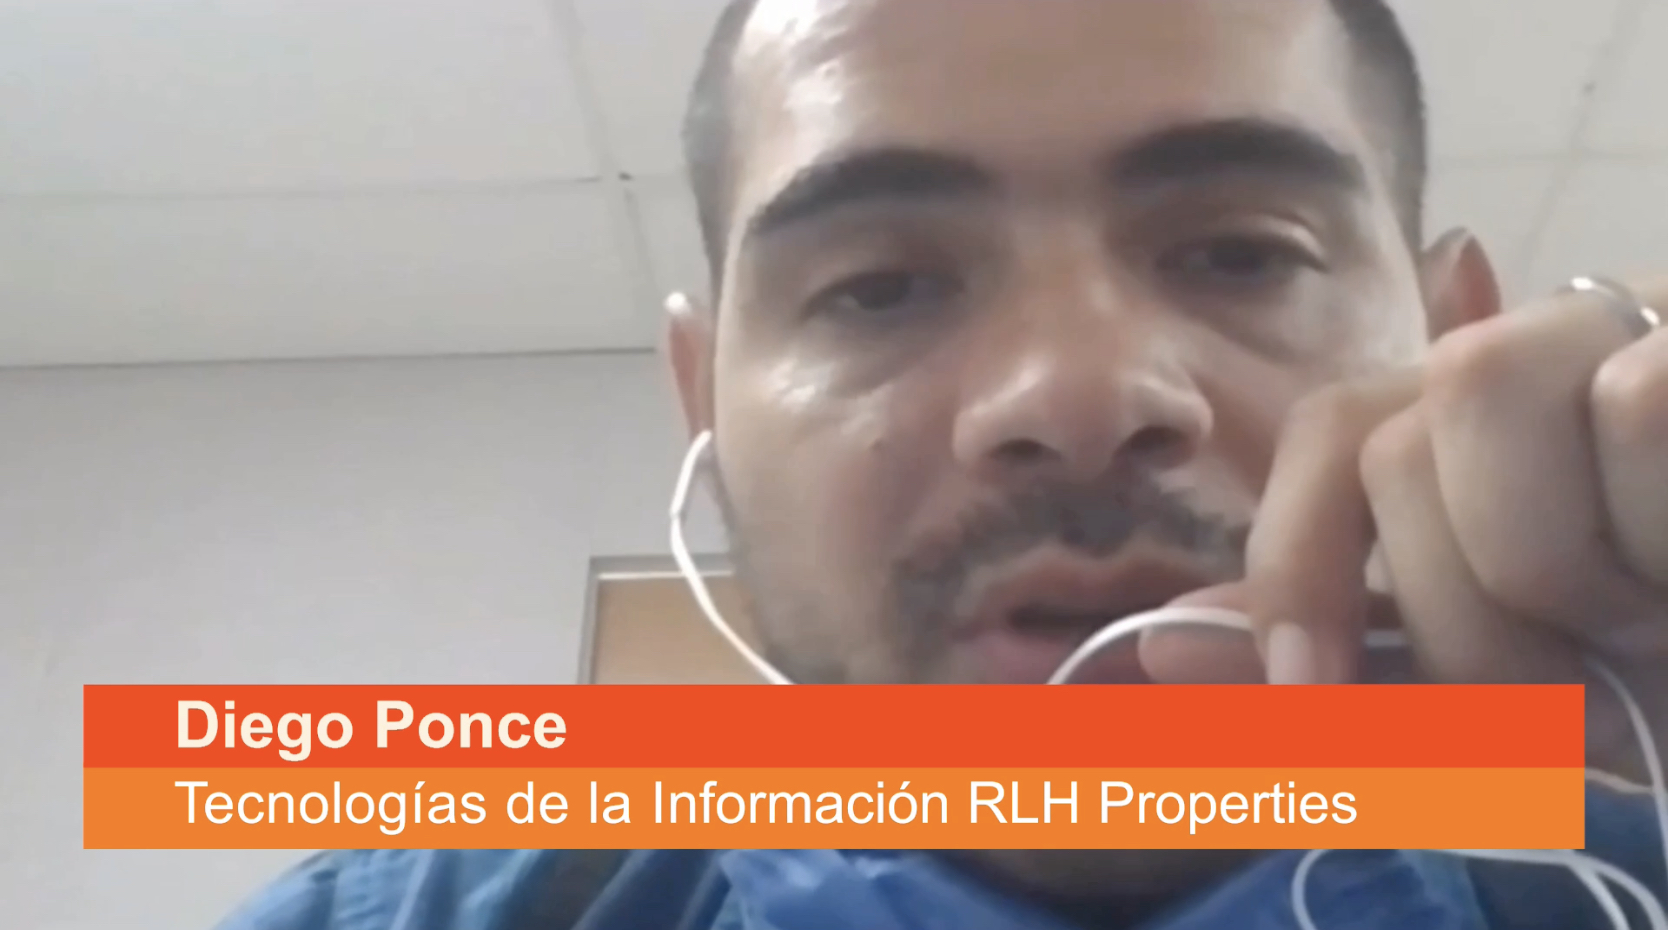 Diego Ponce de RLH Properties